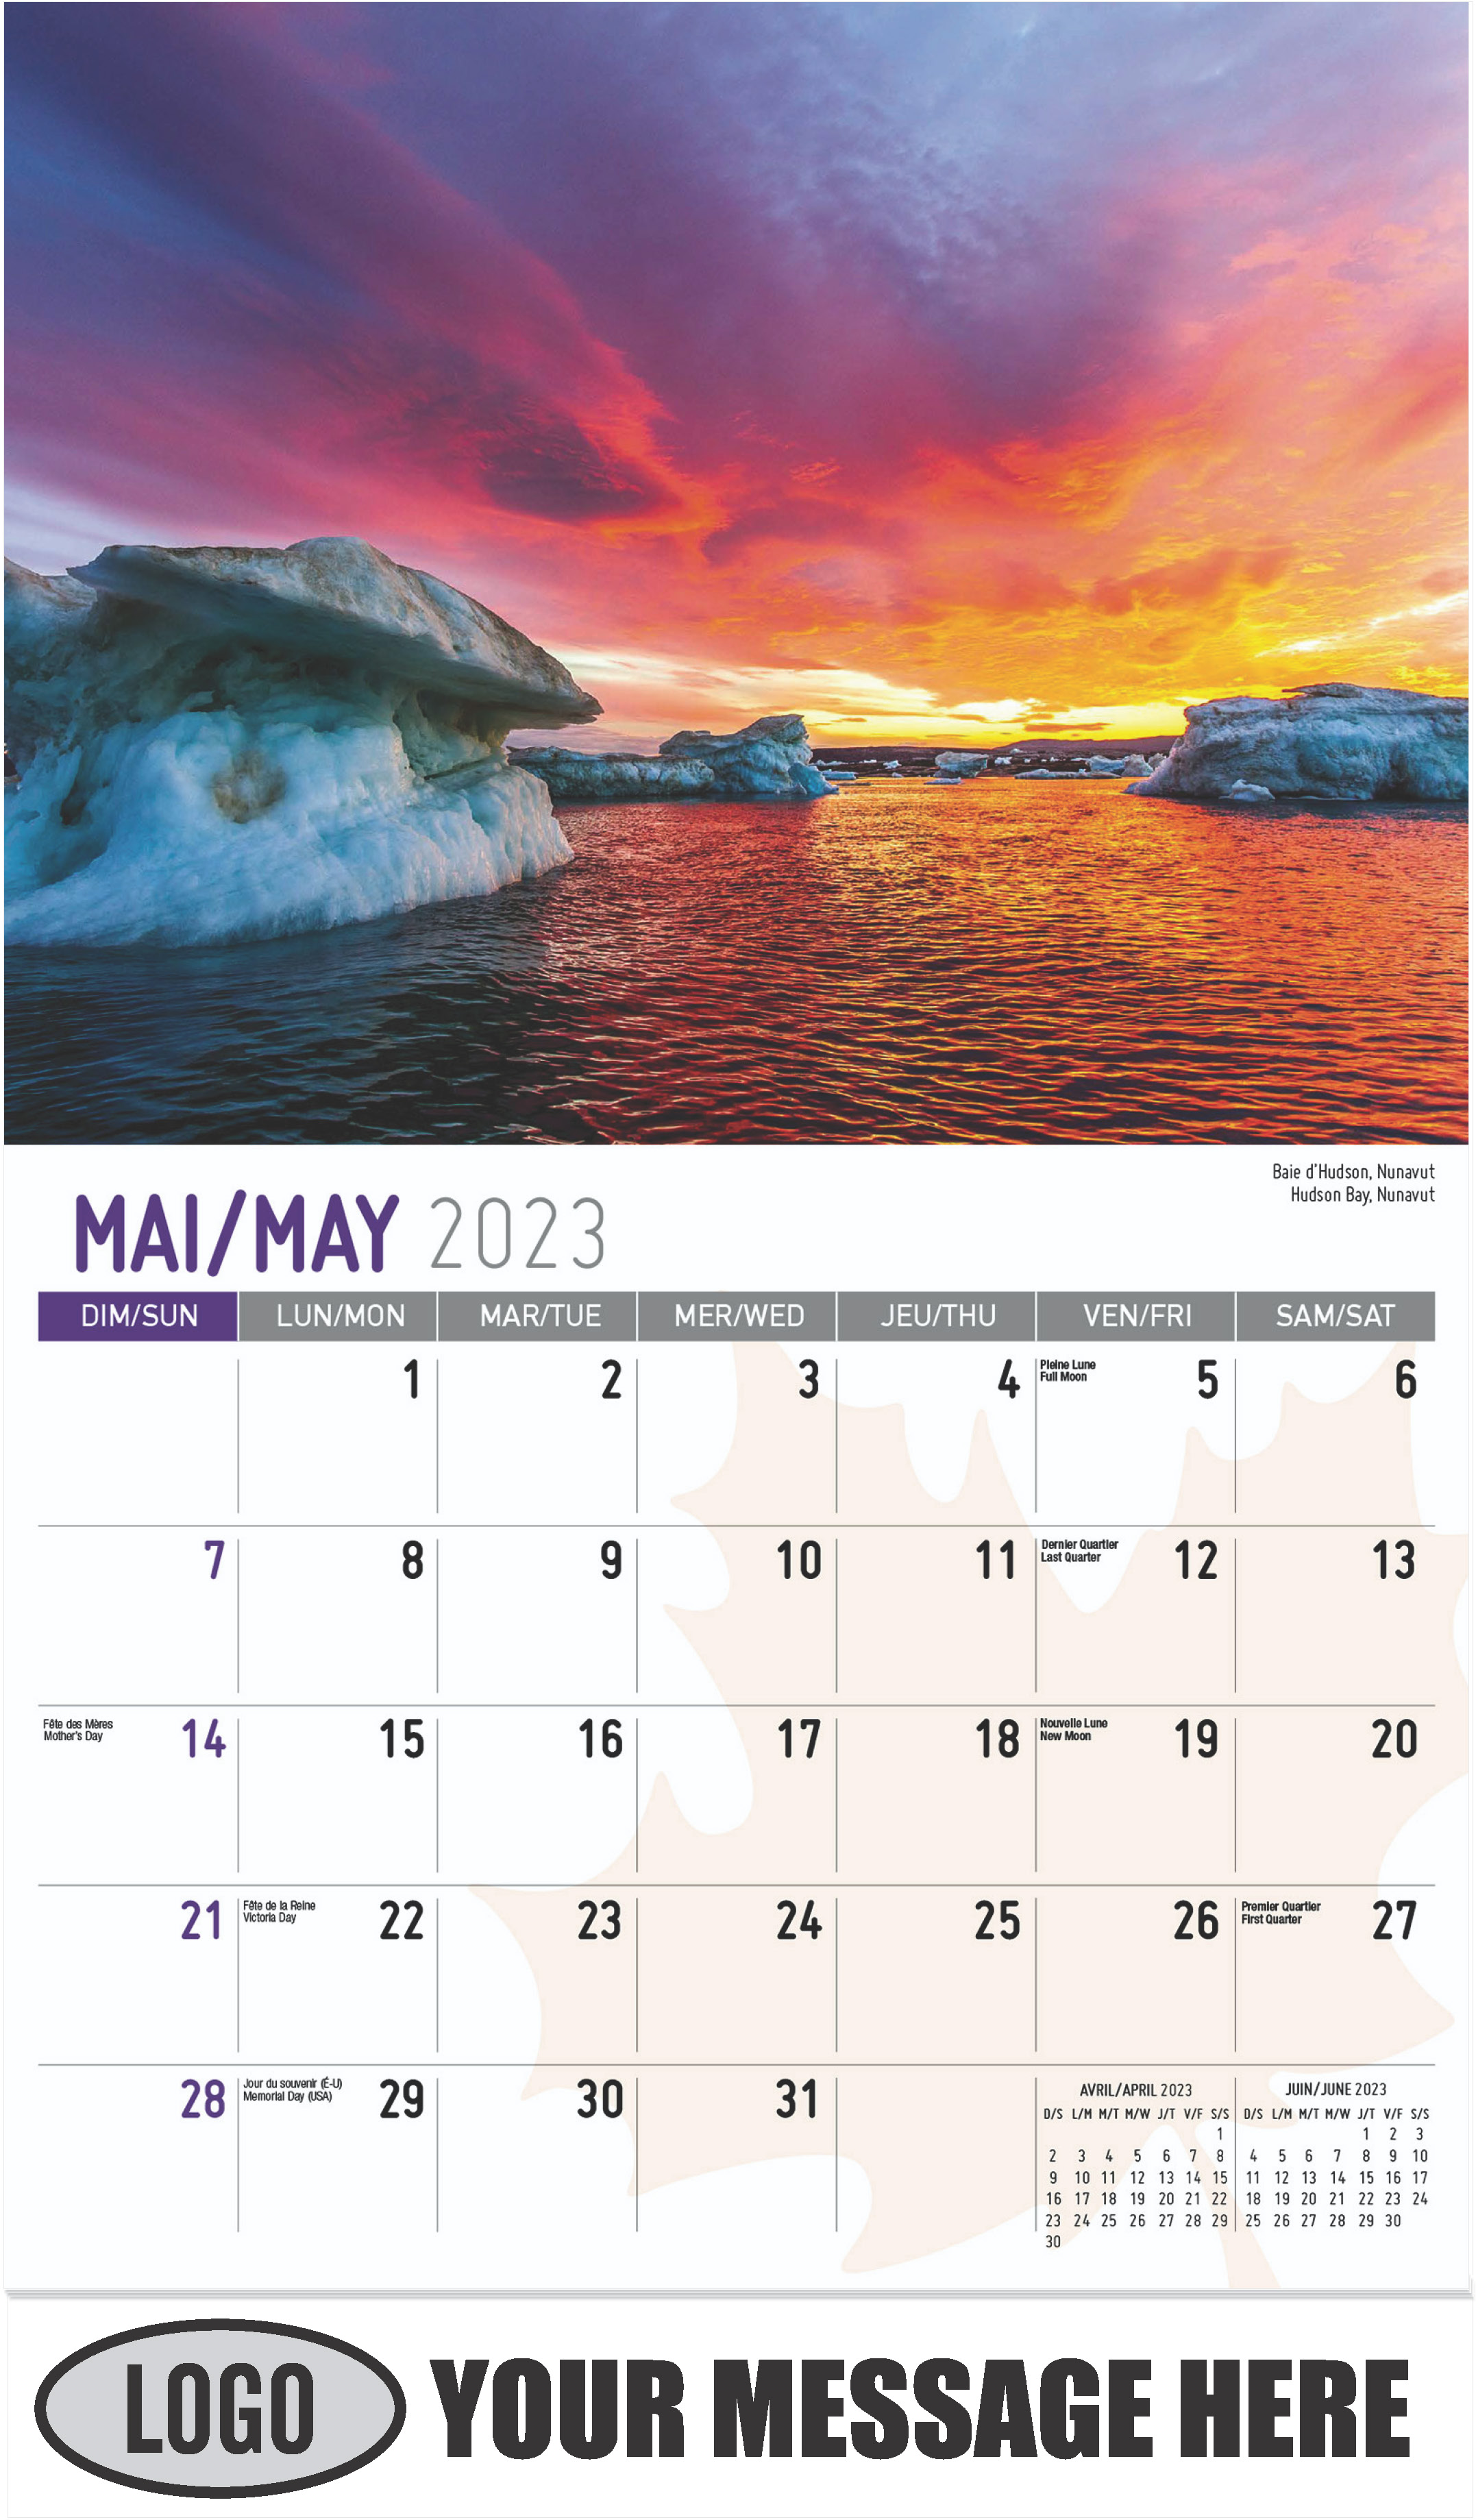 Hudson Bay, Nunavut - May - Scenes of Canada(French-English bilingual) 2023 Promotional Calendar